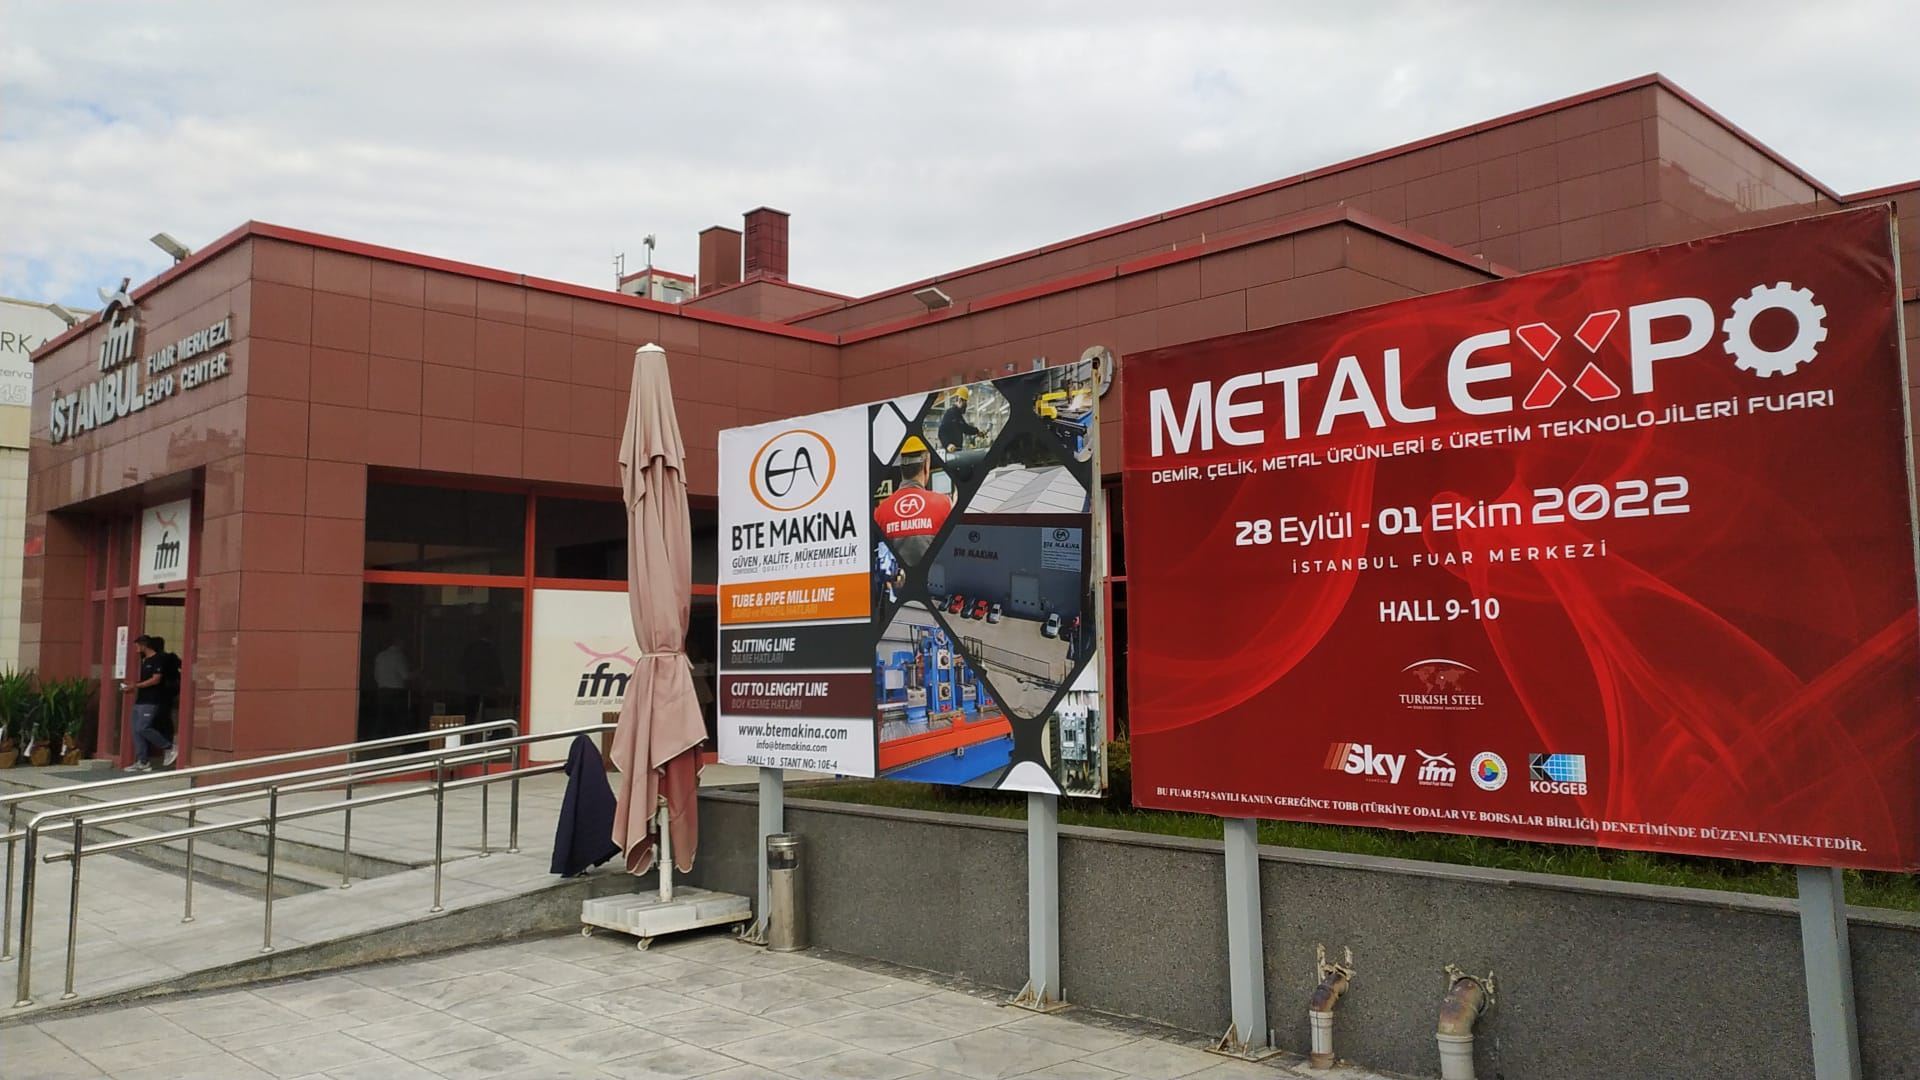 Metal Expo 2022 Fair has opened its doors